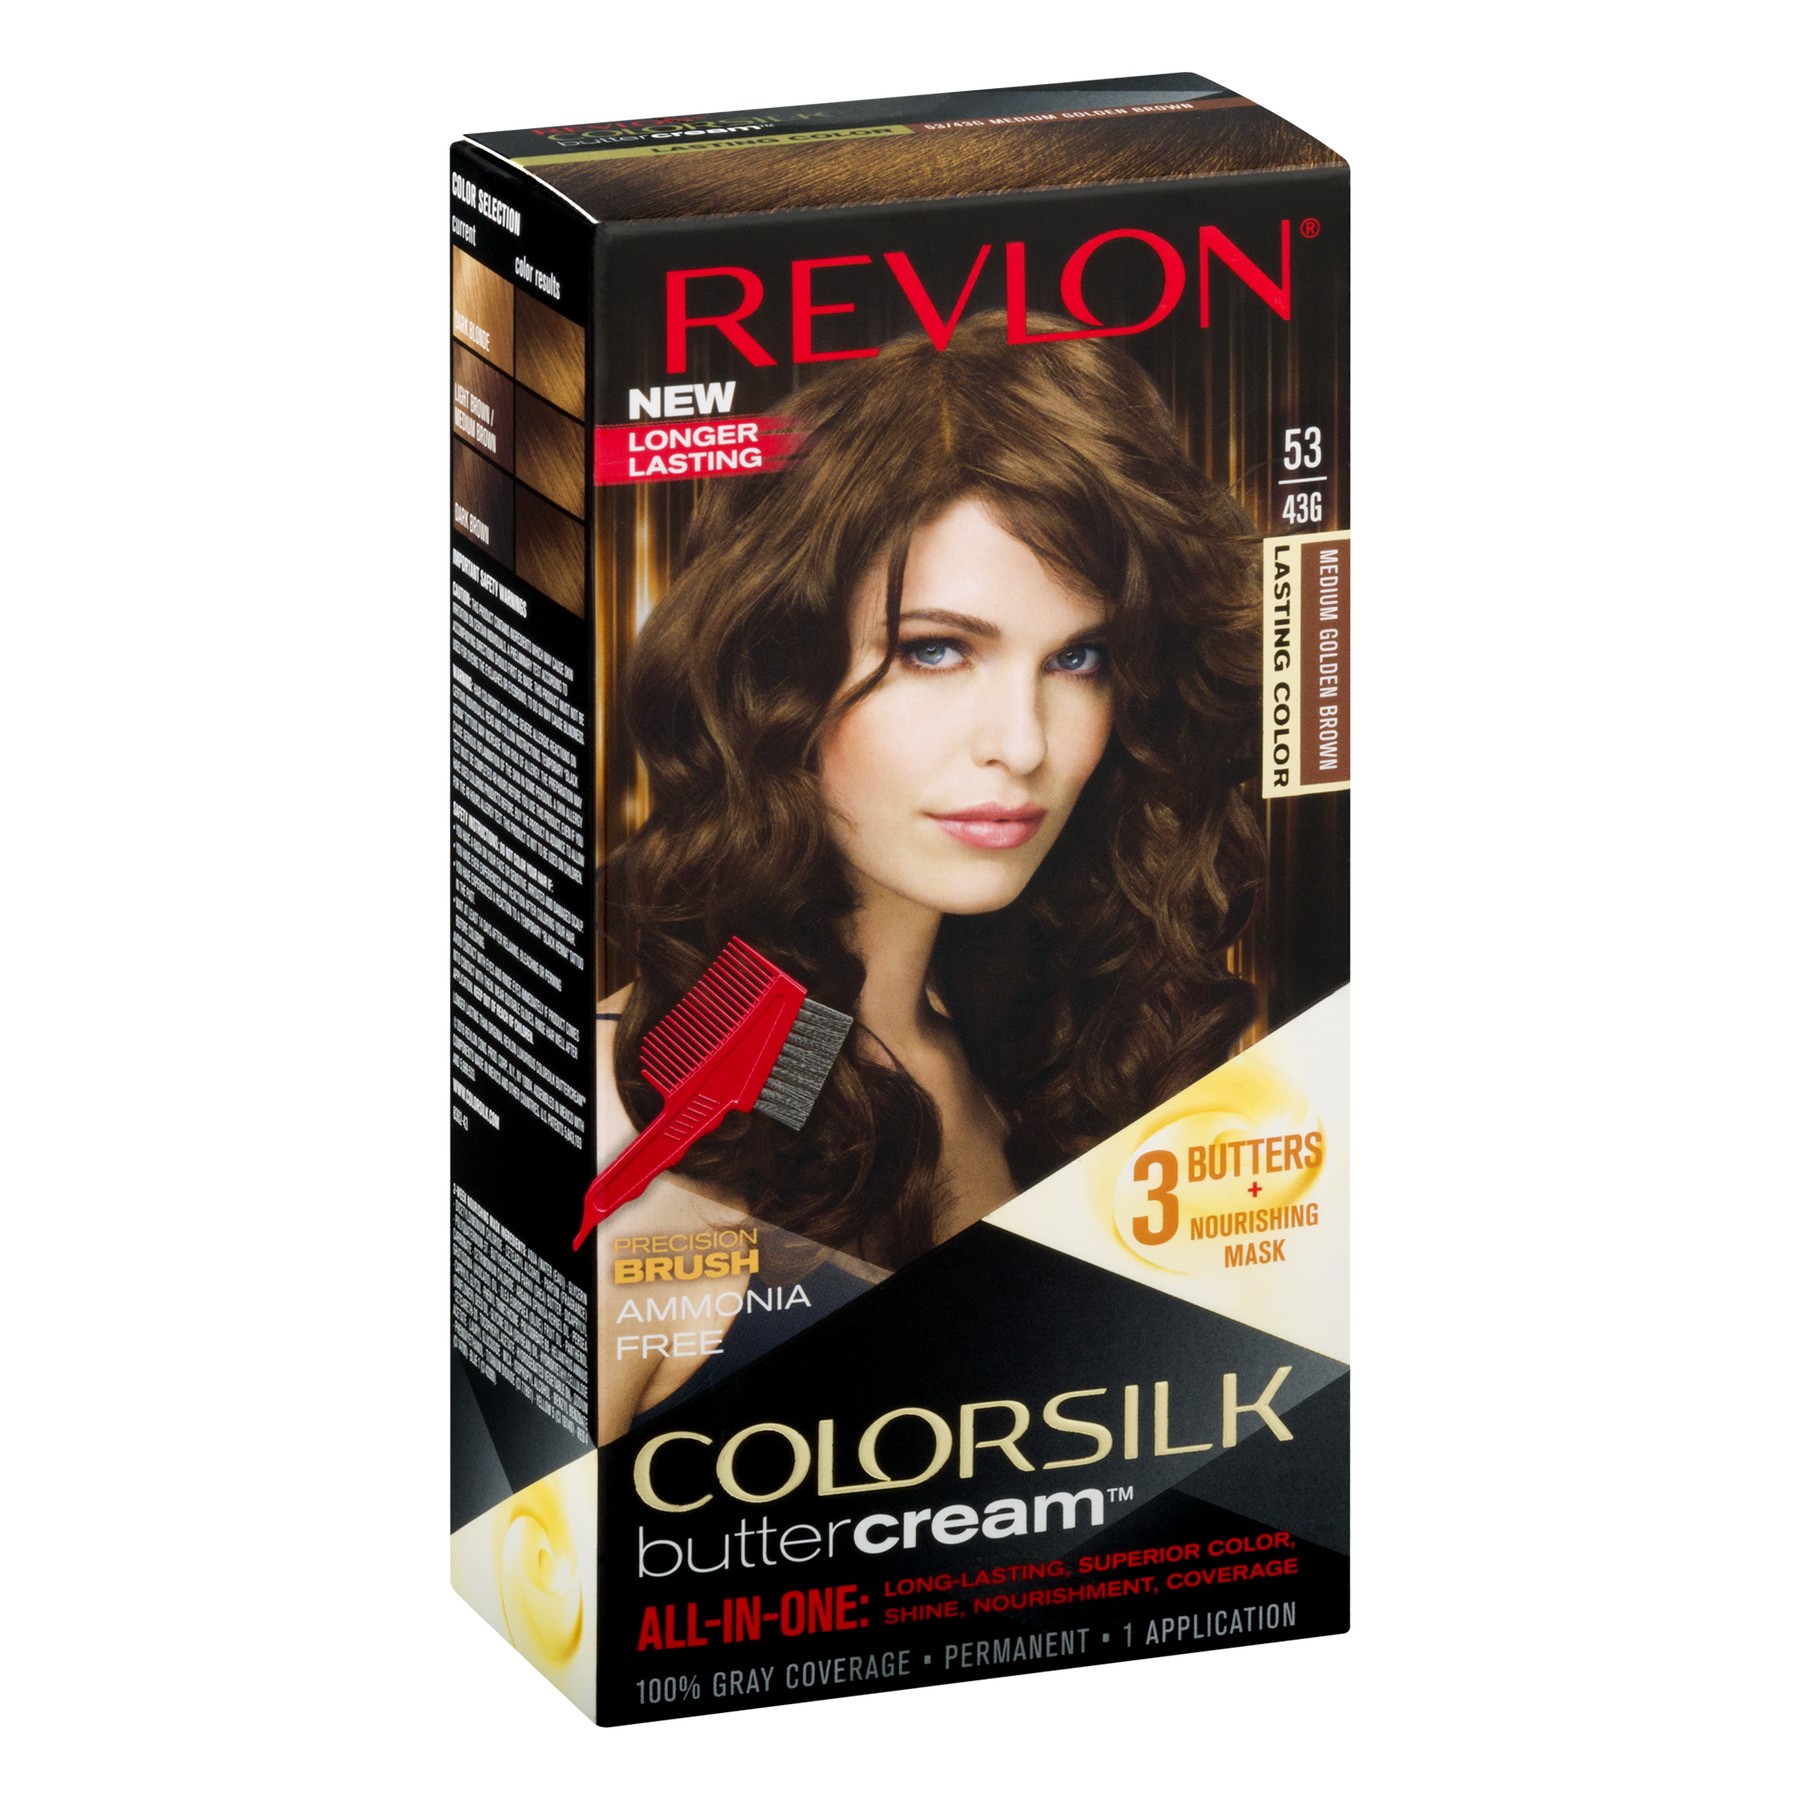 Revlon ColorSilk Buttercream™ Hair Color - Medium Golden Brown - image 2 of 2